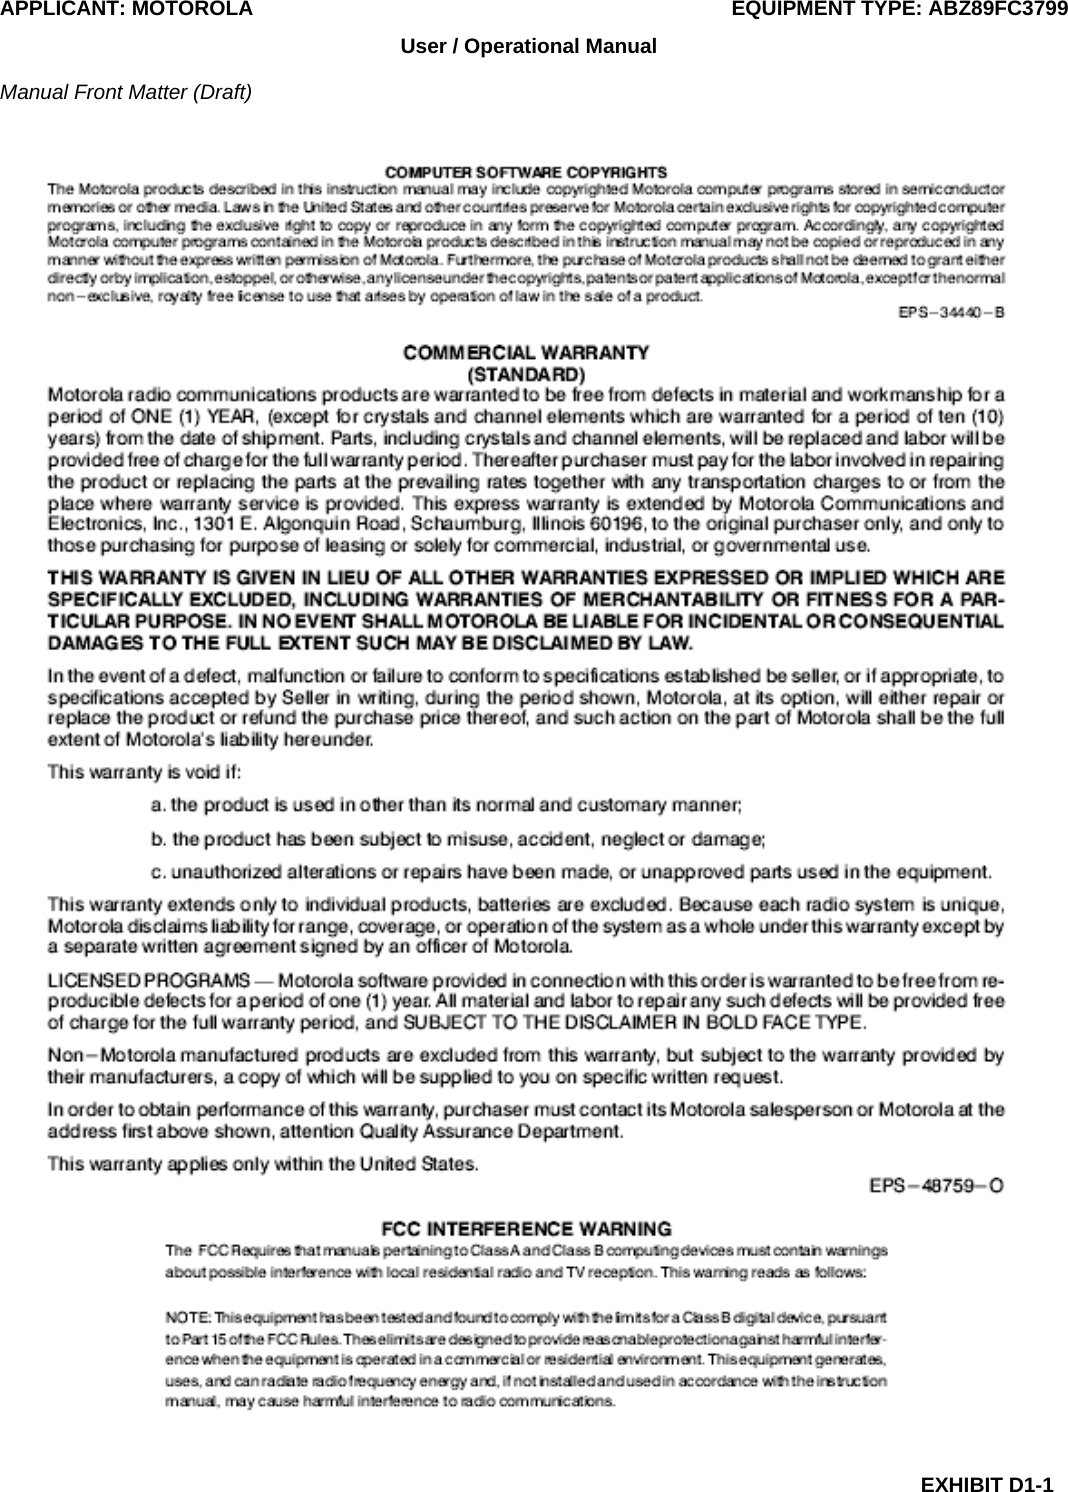 APPLICANT: MOTOROLA  EQUIPMENT TYPE: ABZ89FC3799 EXHIBIT D1-1 User / Operational Manual  Manual Front Matter (Draft) 